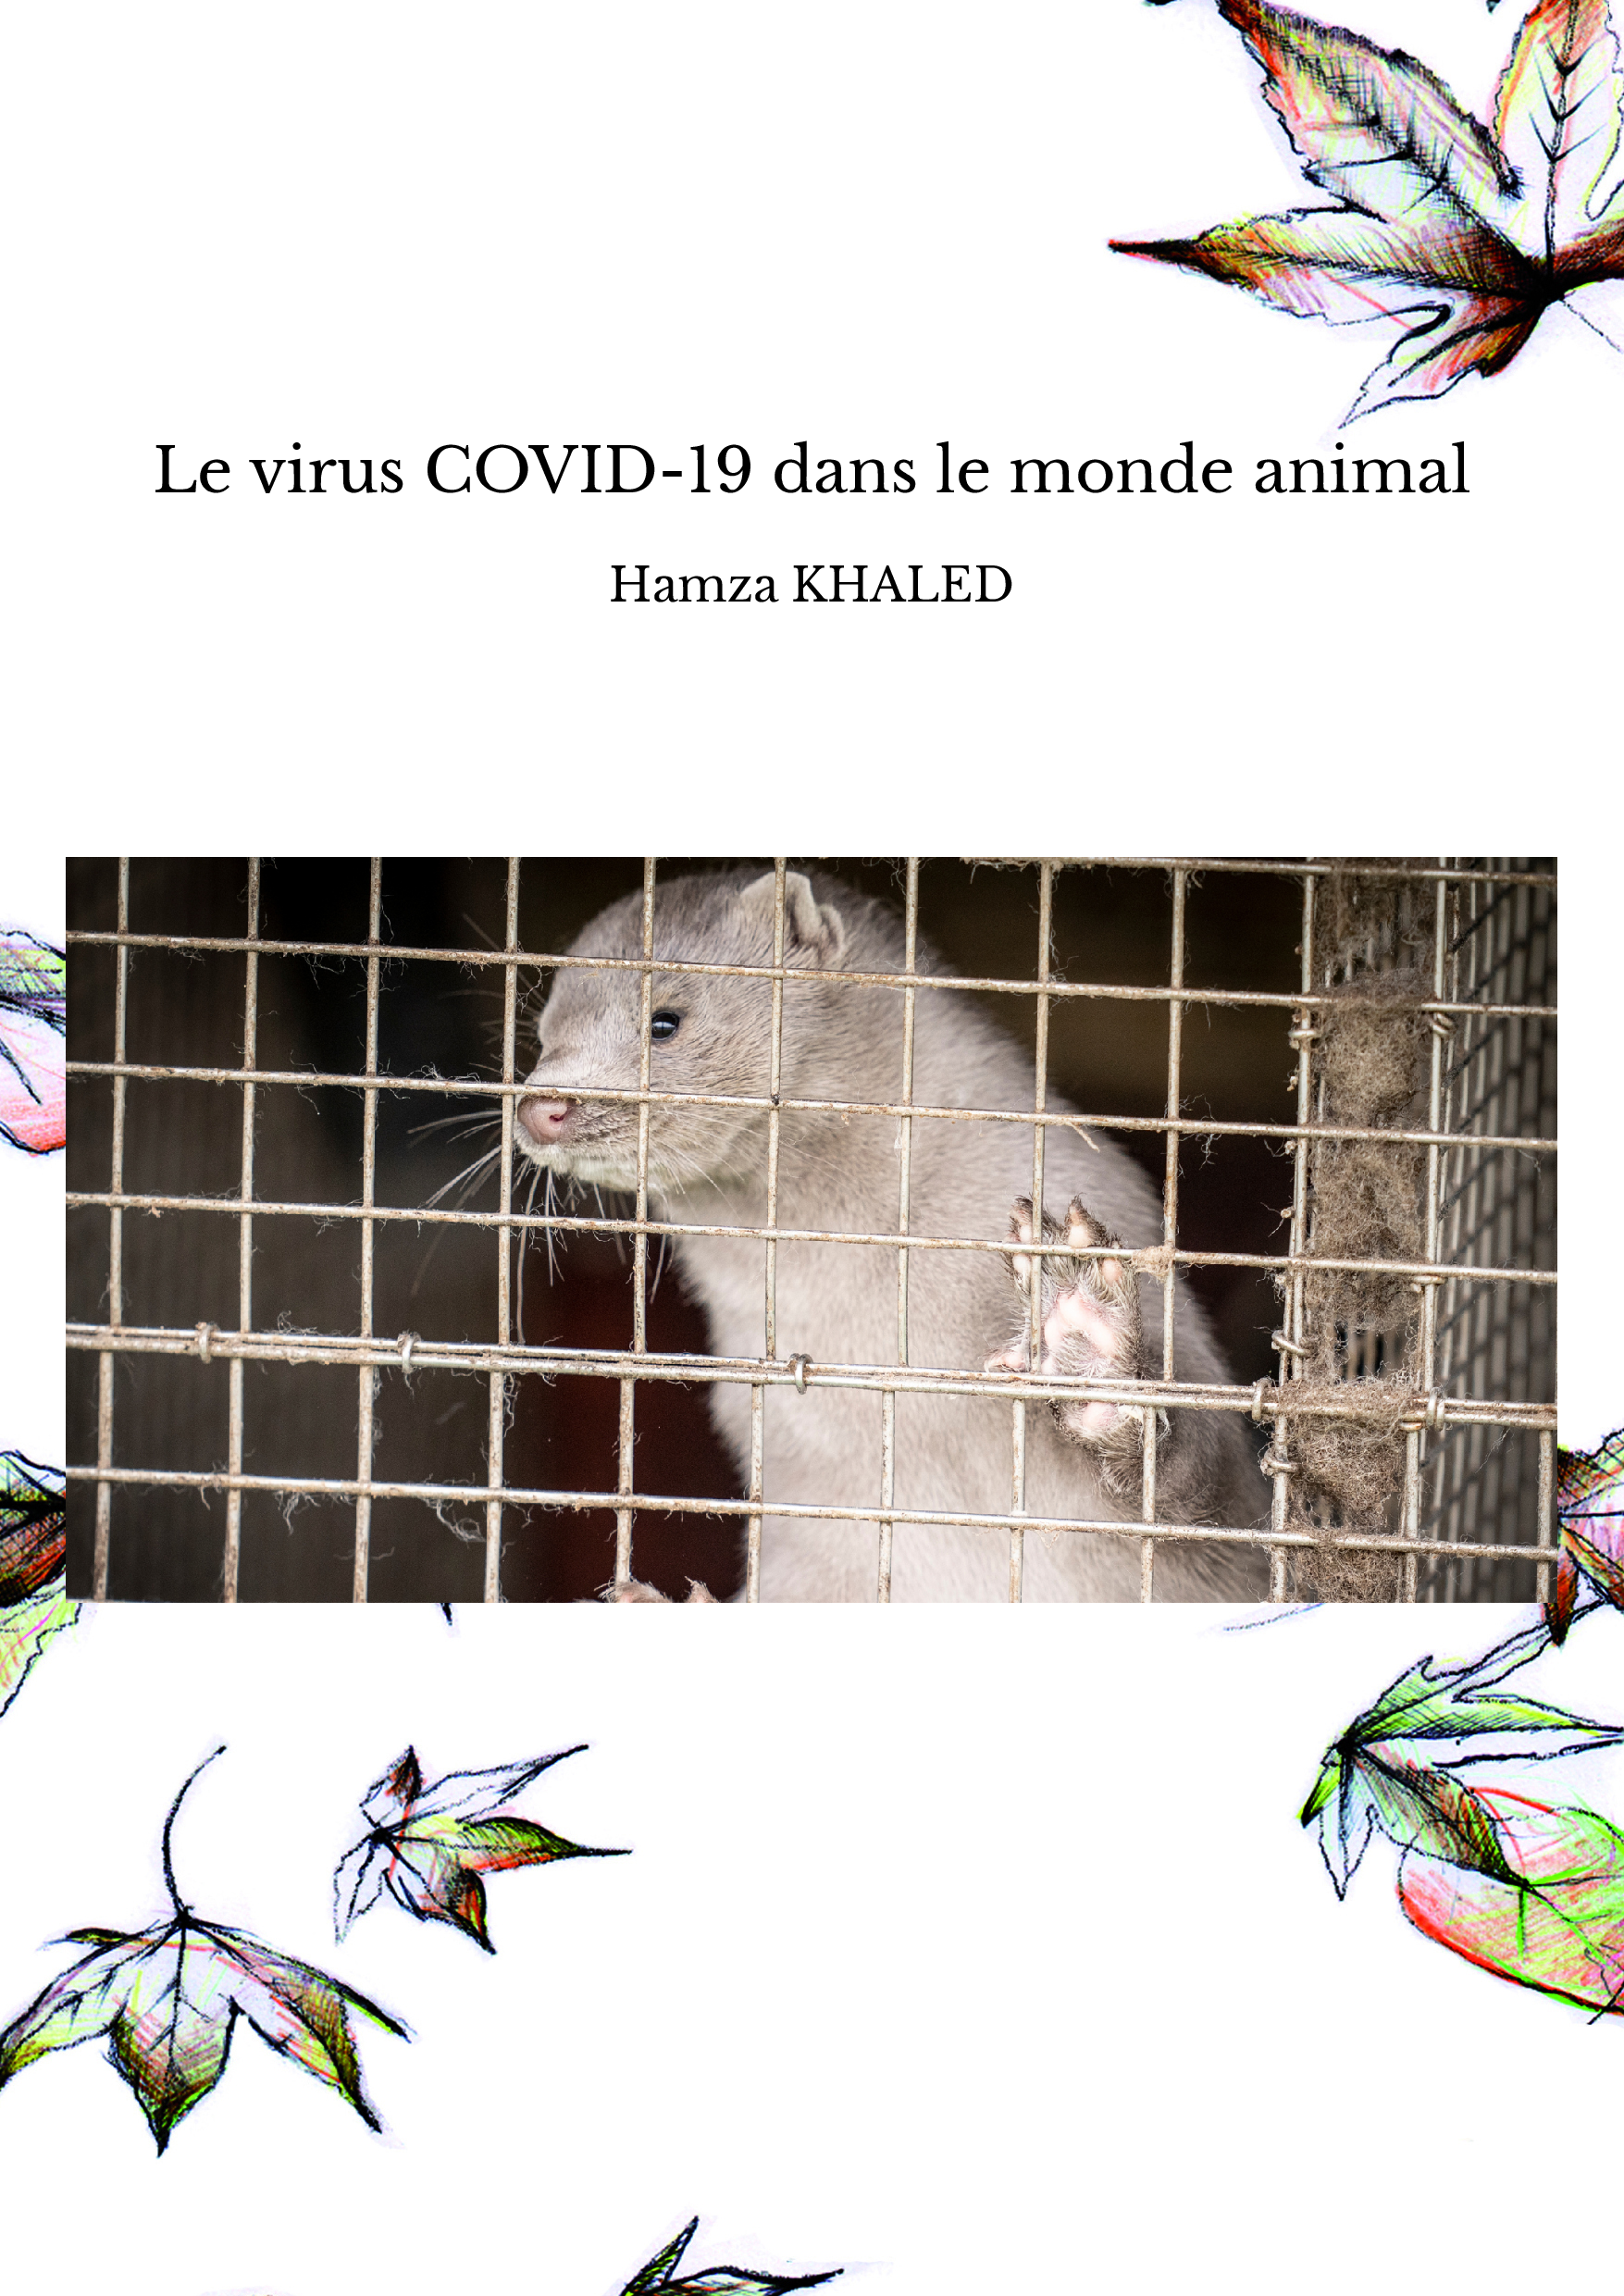 Le virus COVID-19 dans le monde animal